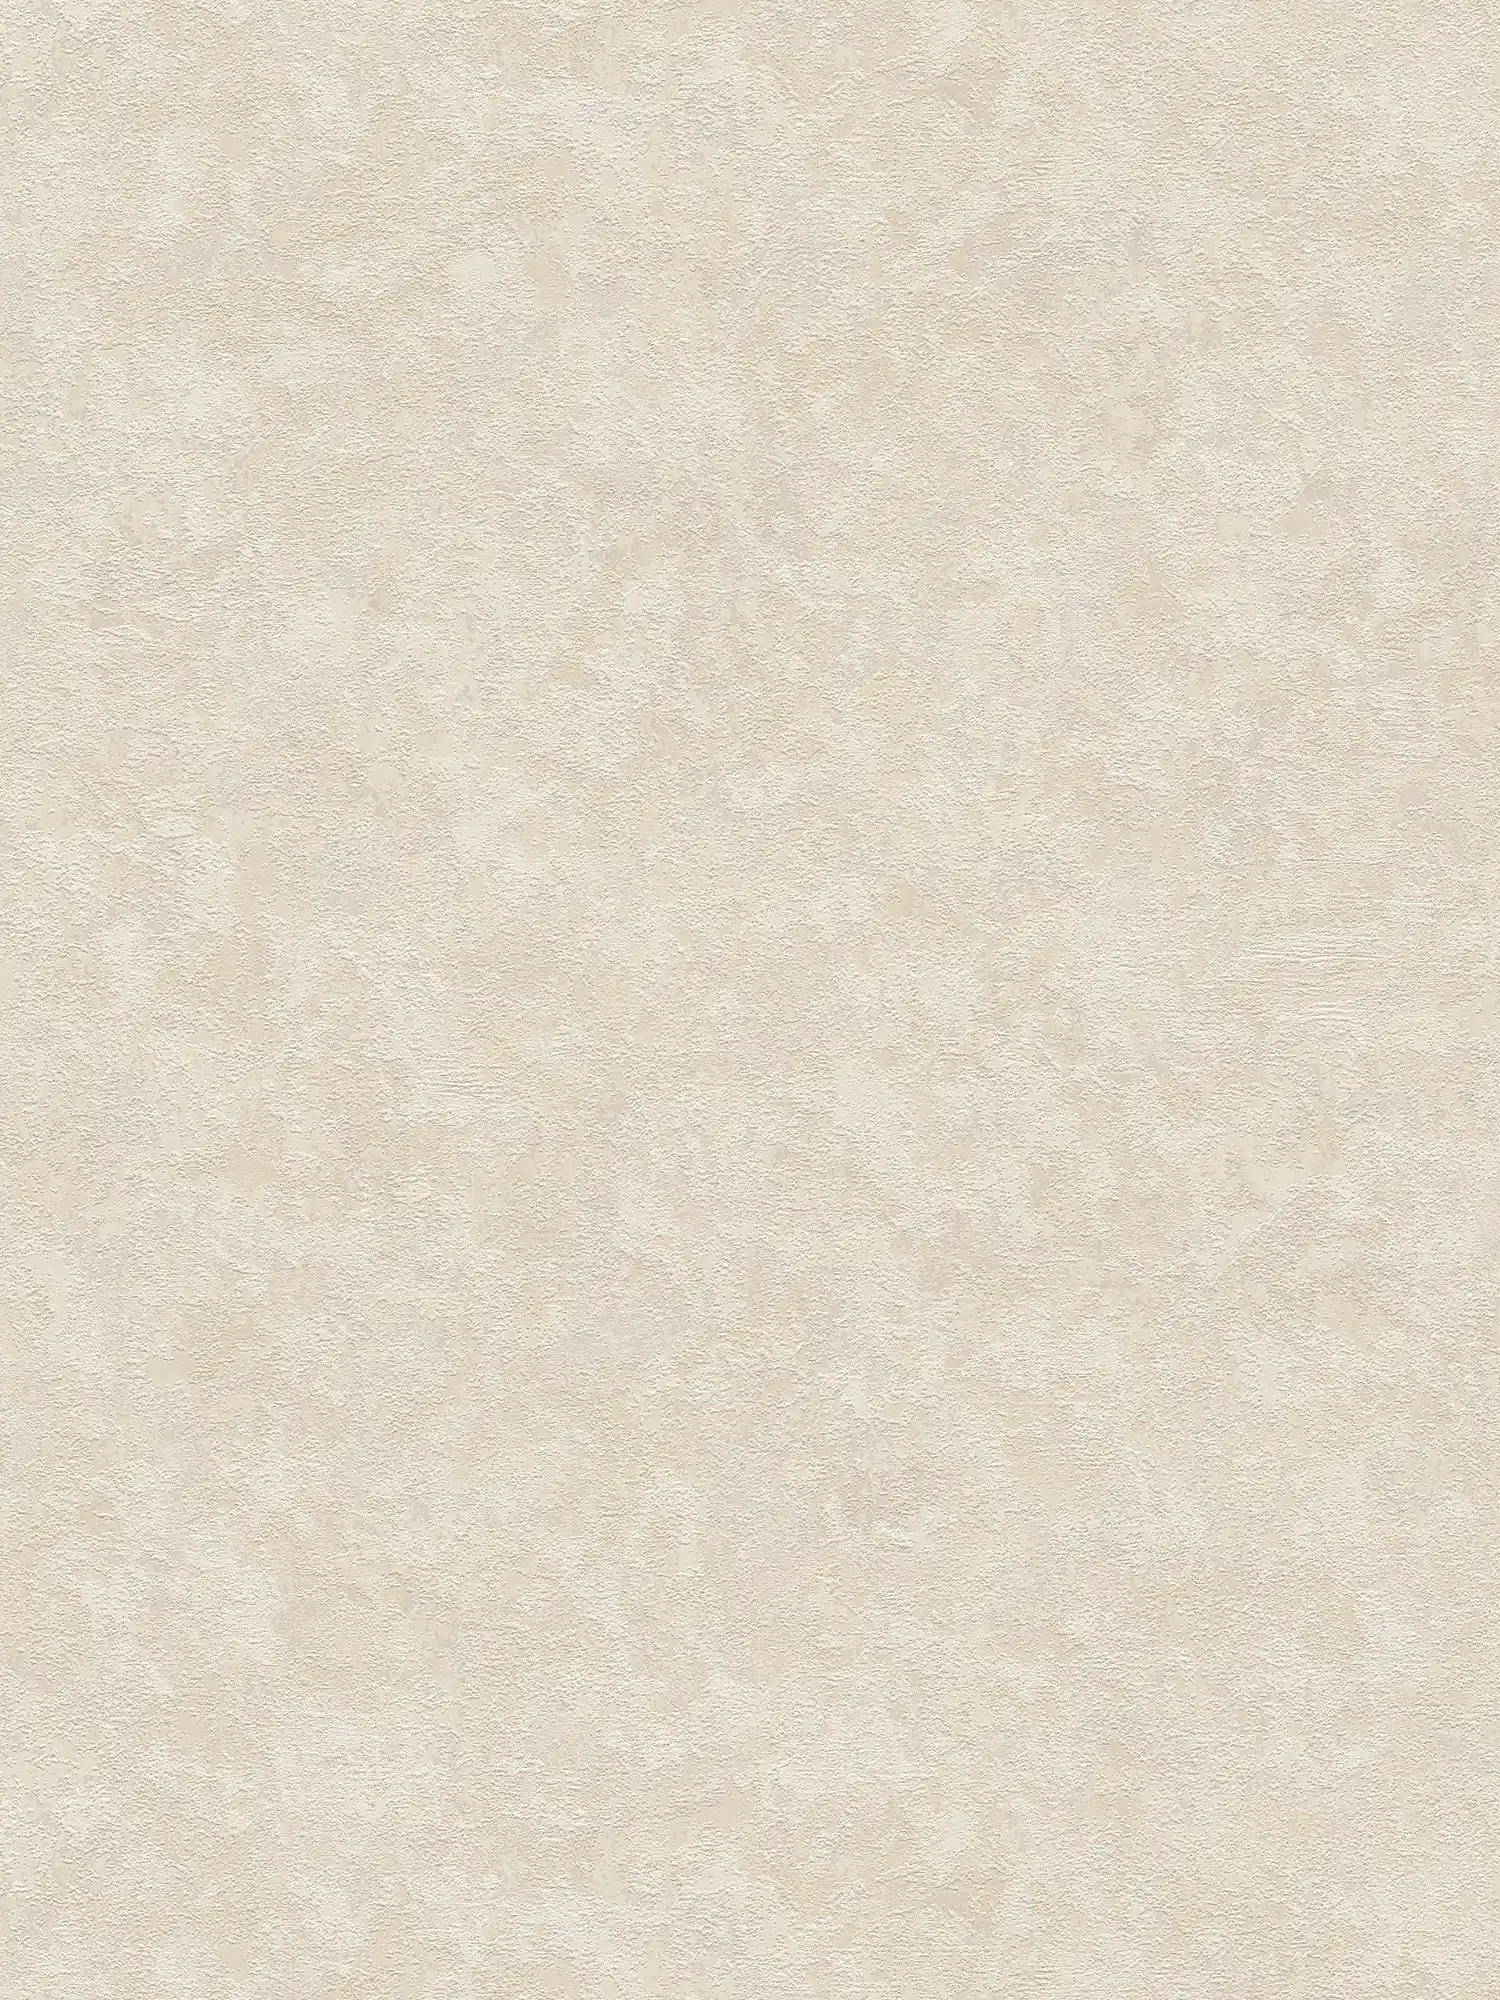 Textured wallpaper plain mottled - beige, brown
